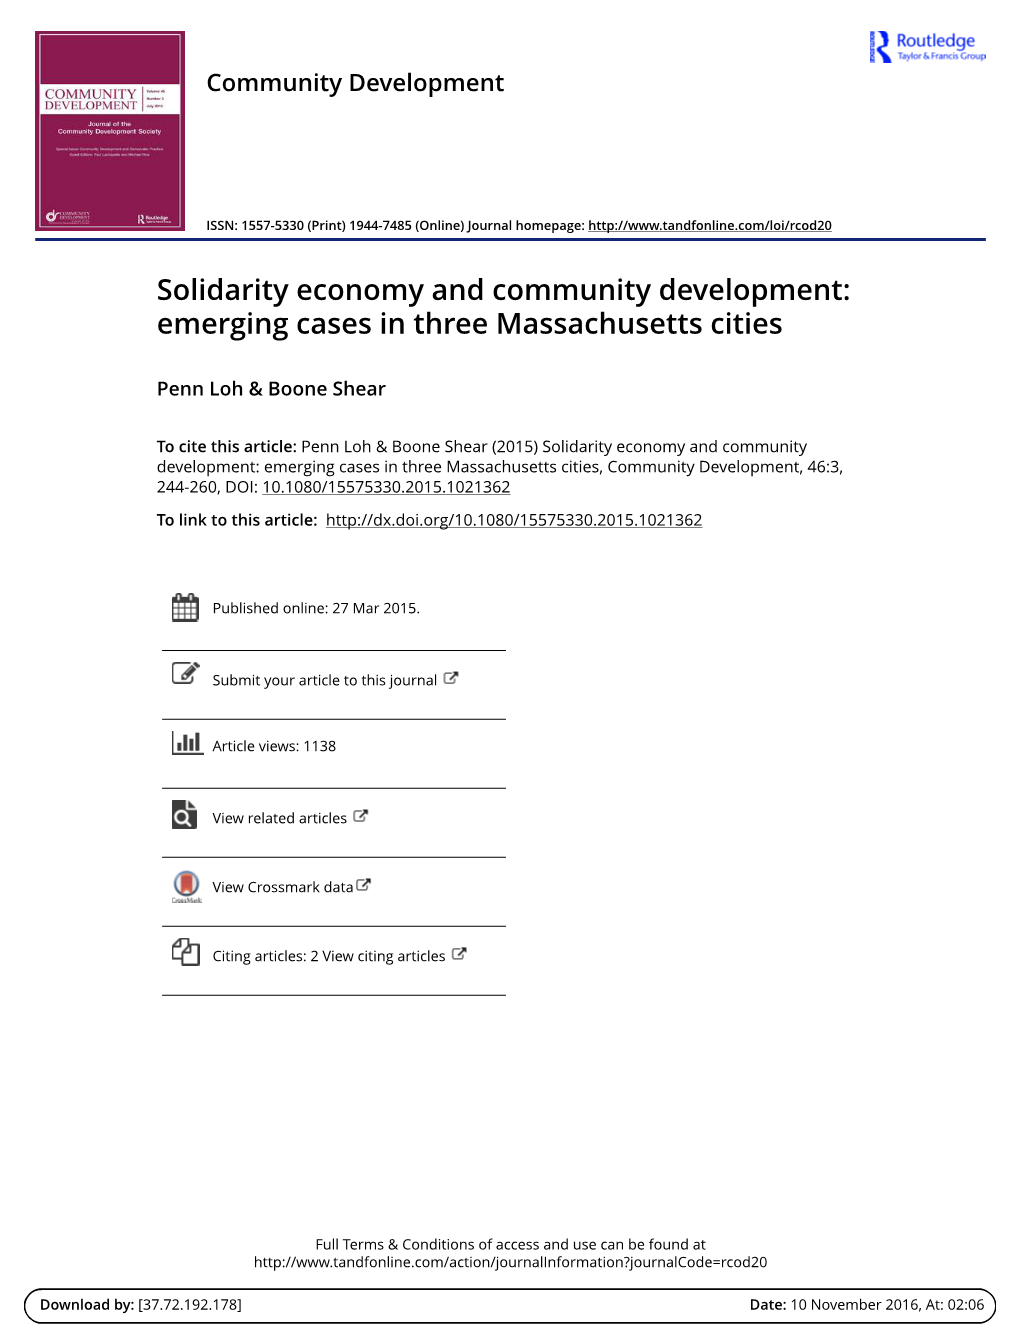 Solidarity Economy and Community Development: Emerging Cases in Three Massachusetts Cities